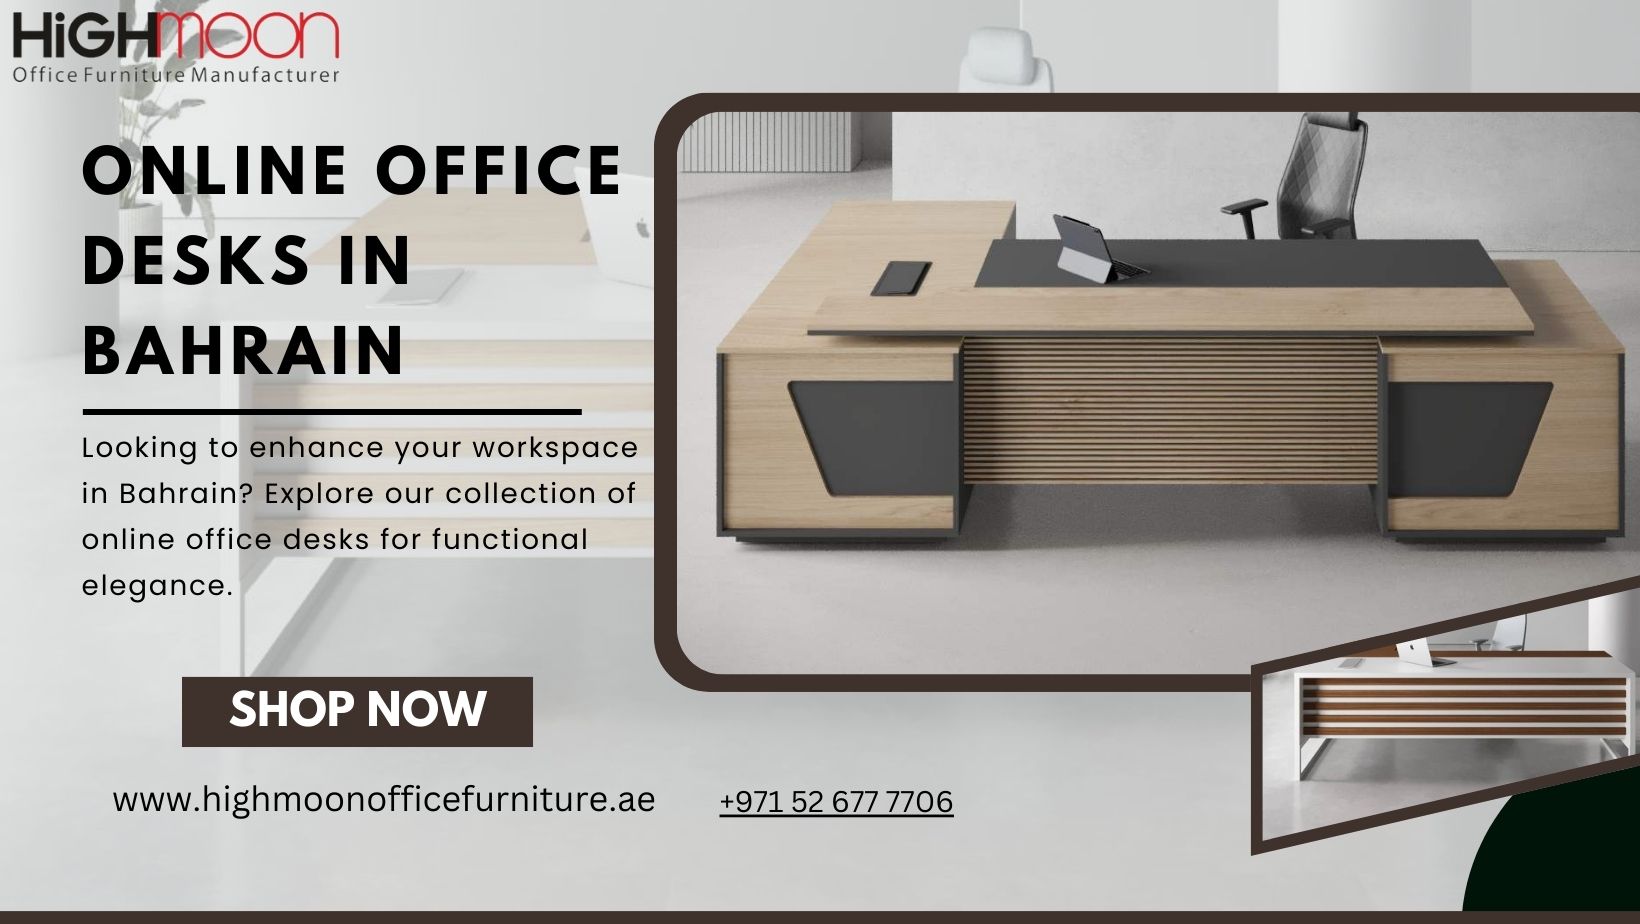 Online office desks in Bahrain